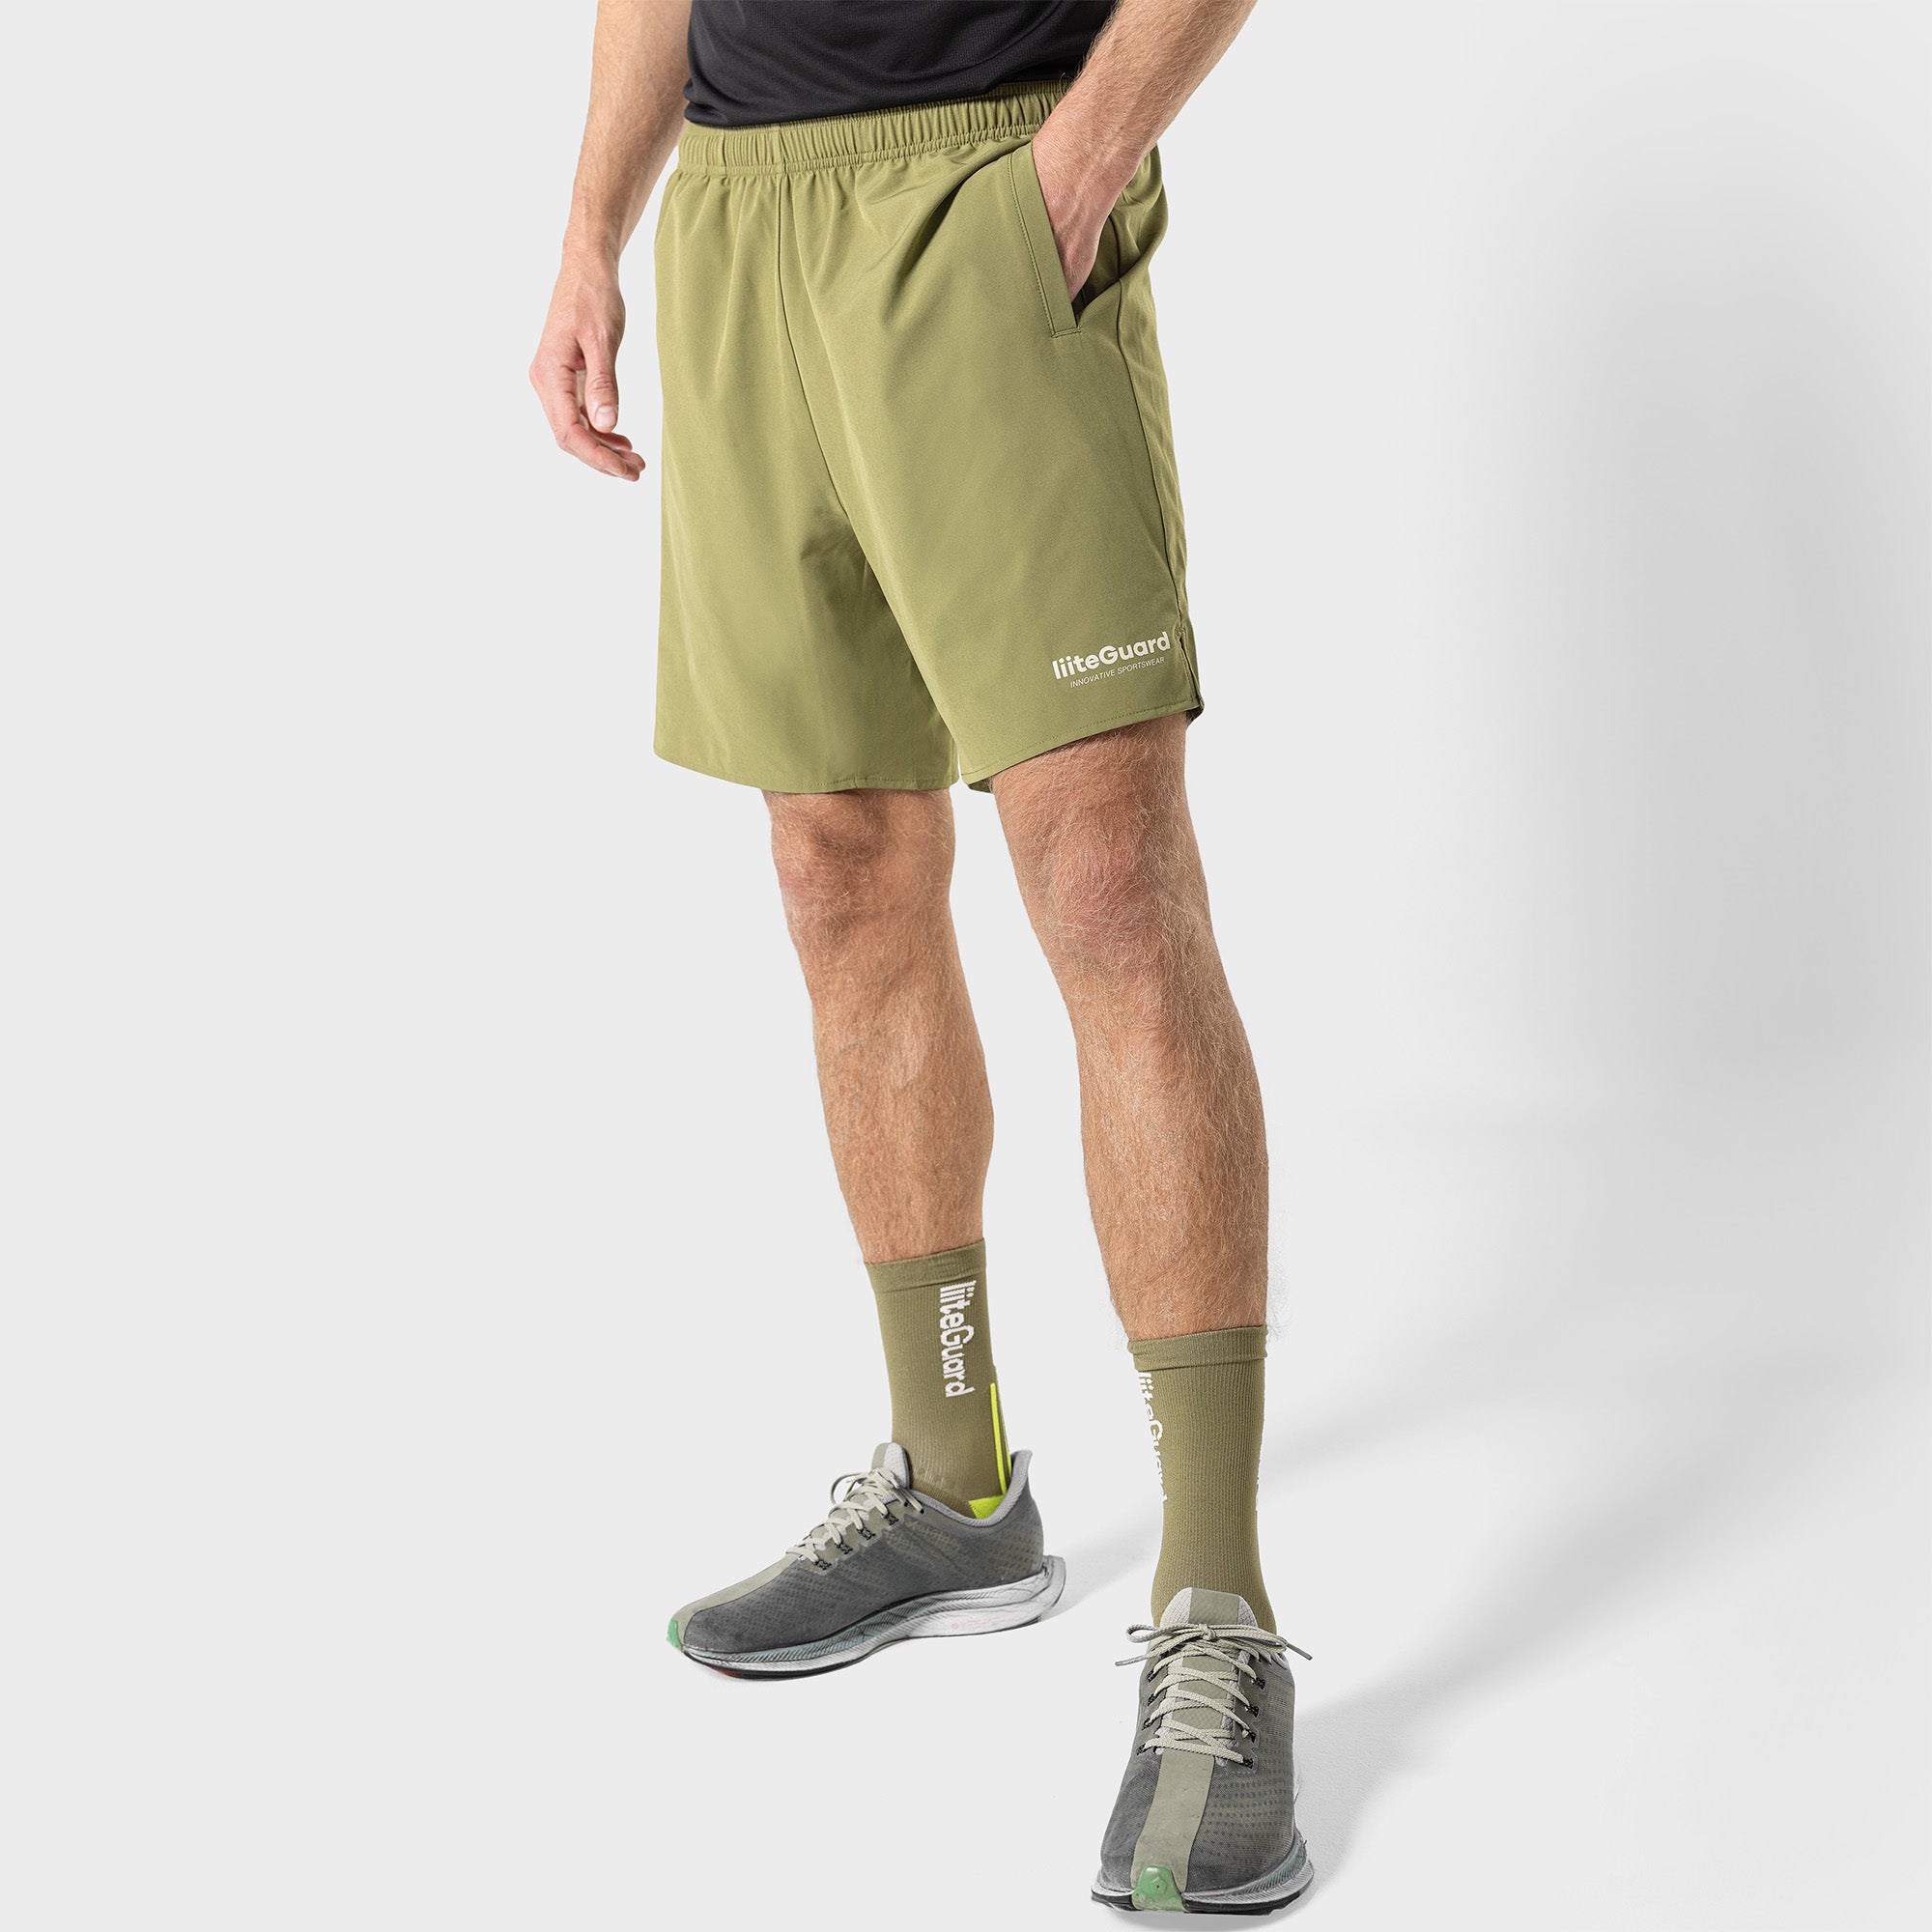 Liiteguard RE-LIITE SHORTS (MEN) Shorts Dusty Green